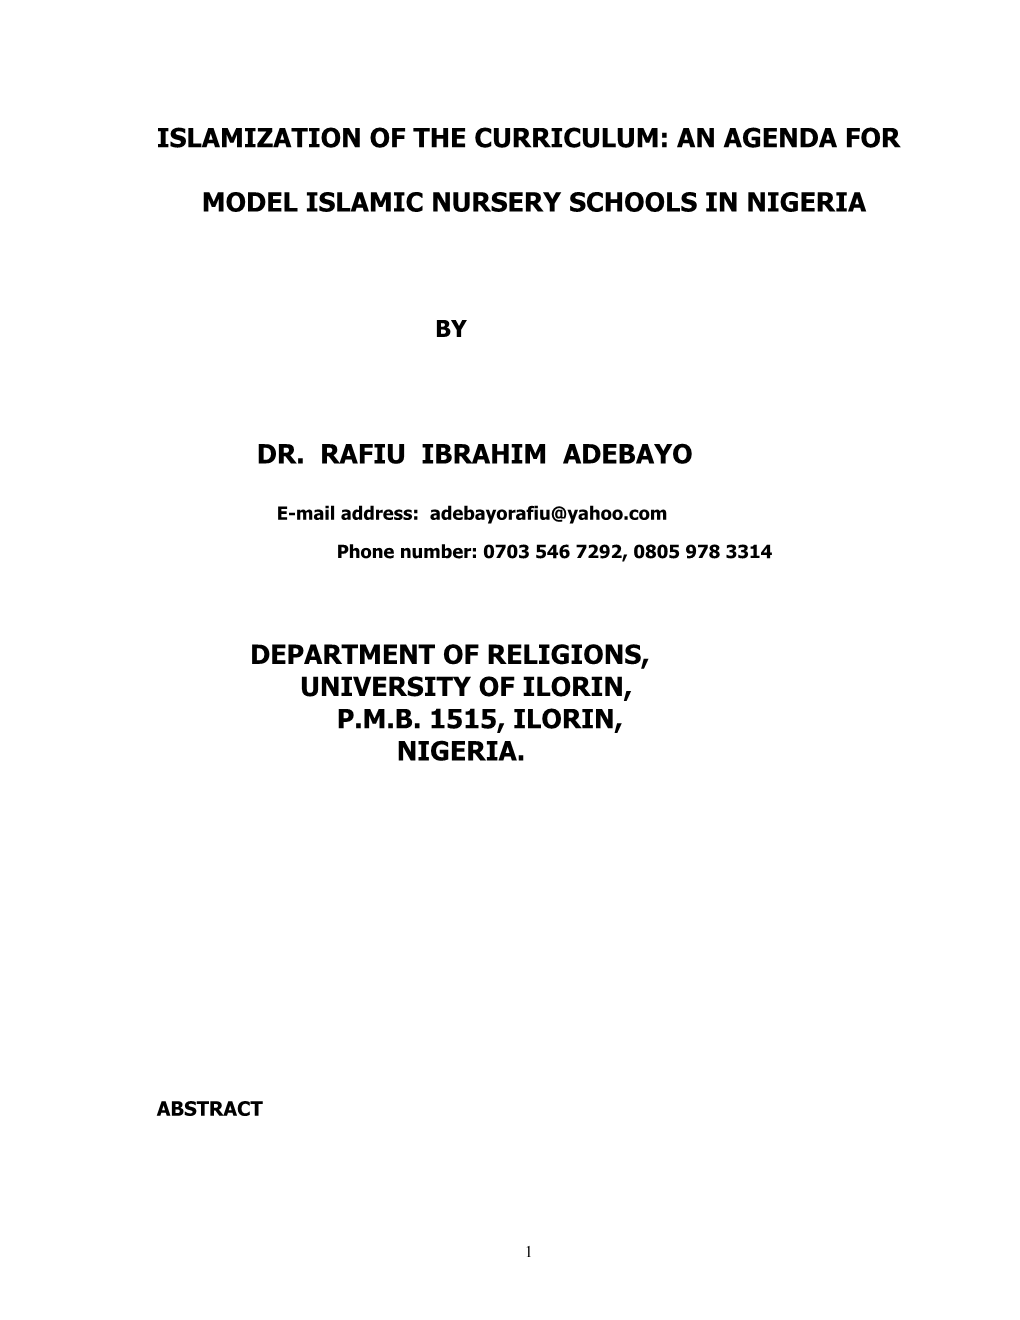 Islamization of the Curriculum: an Agenda for Model Islamic Nursery Schools in Nigeria